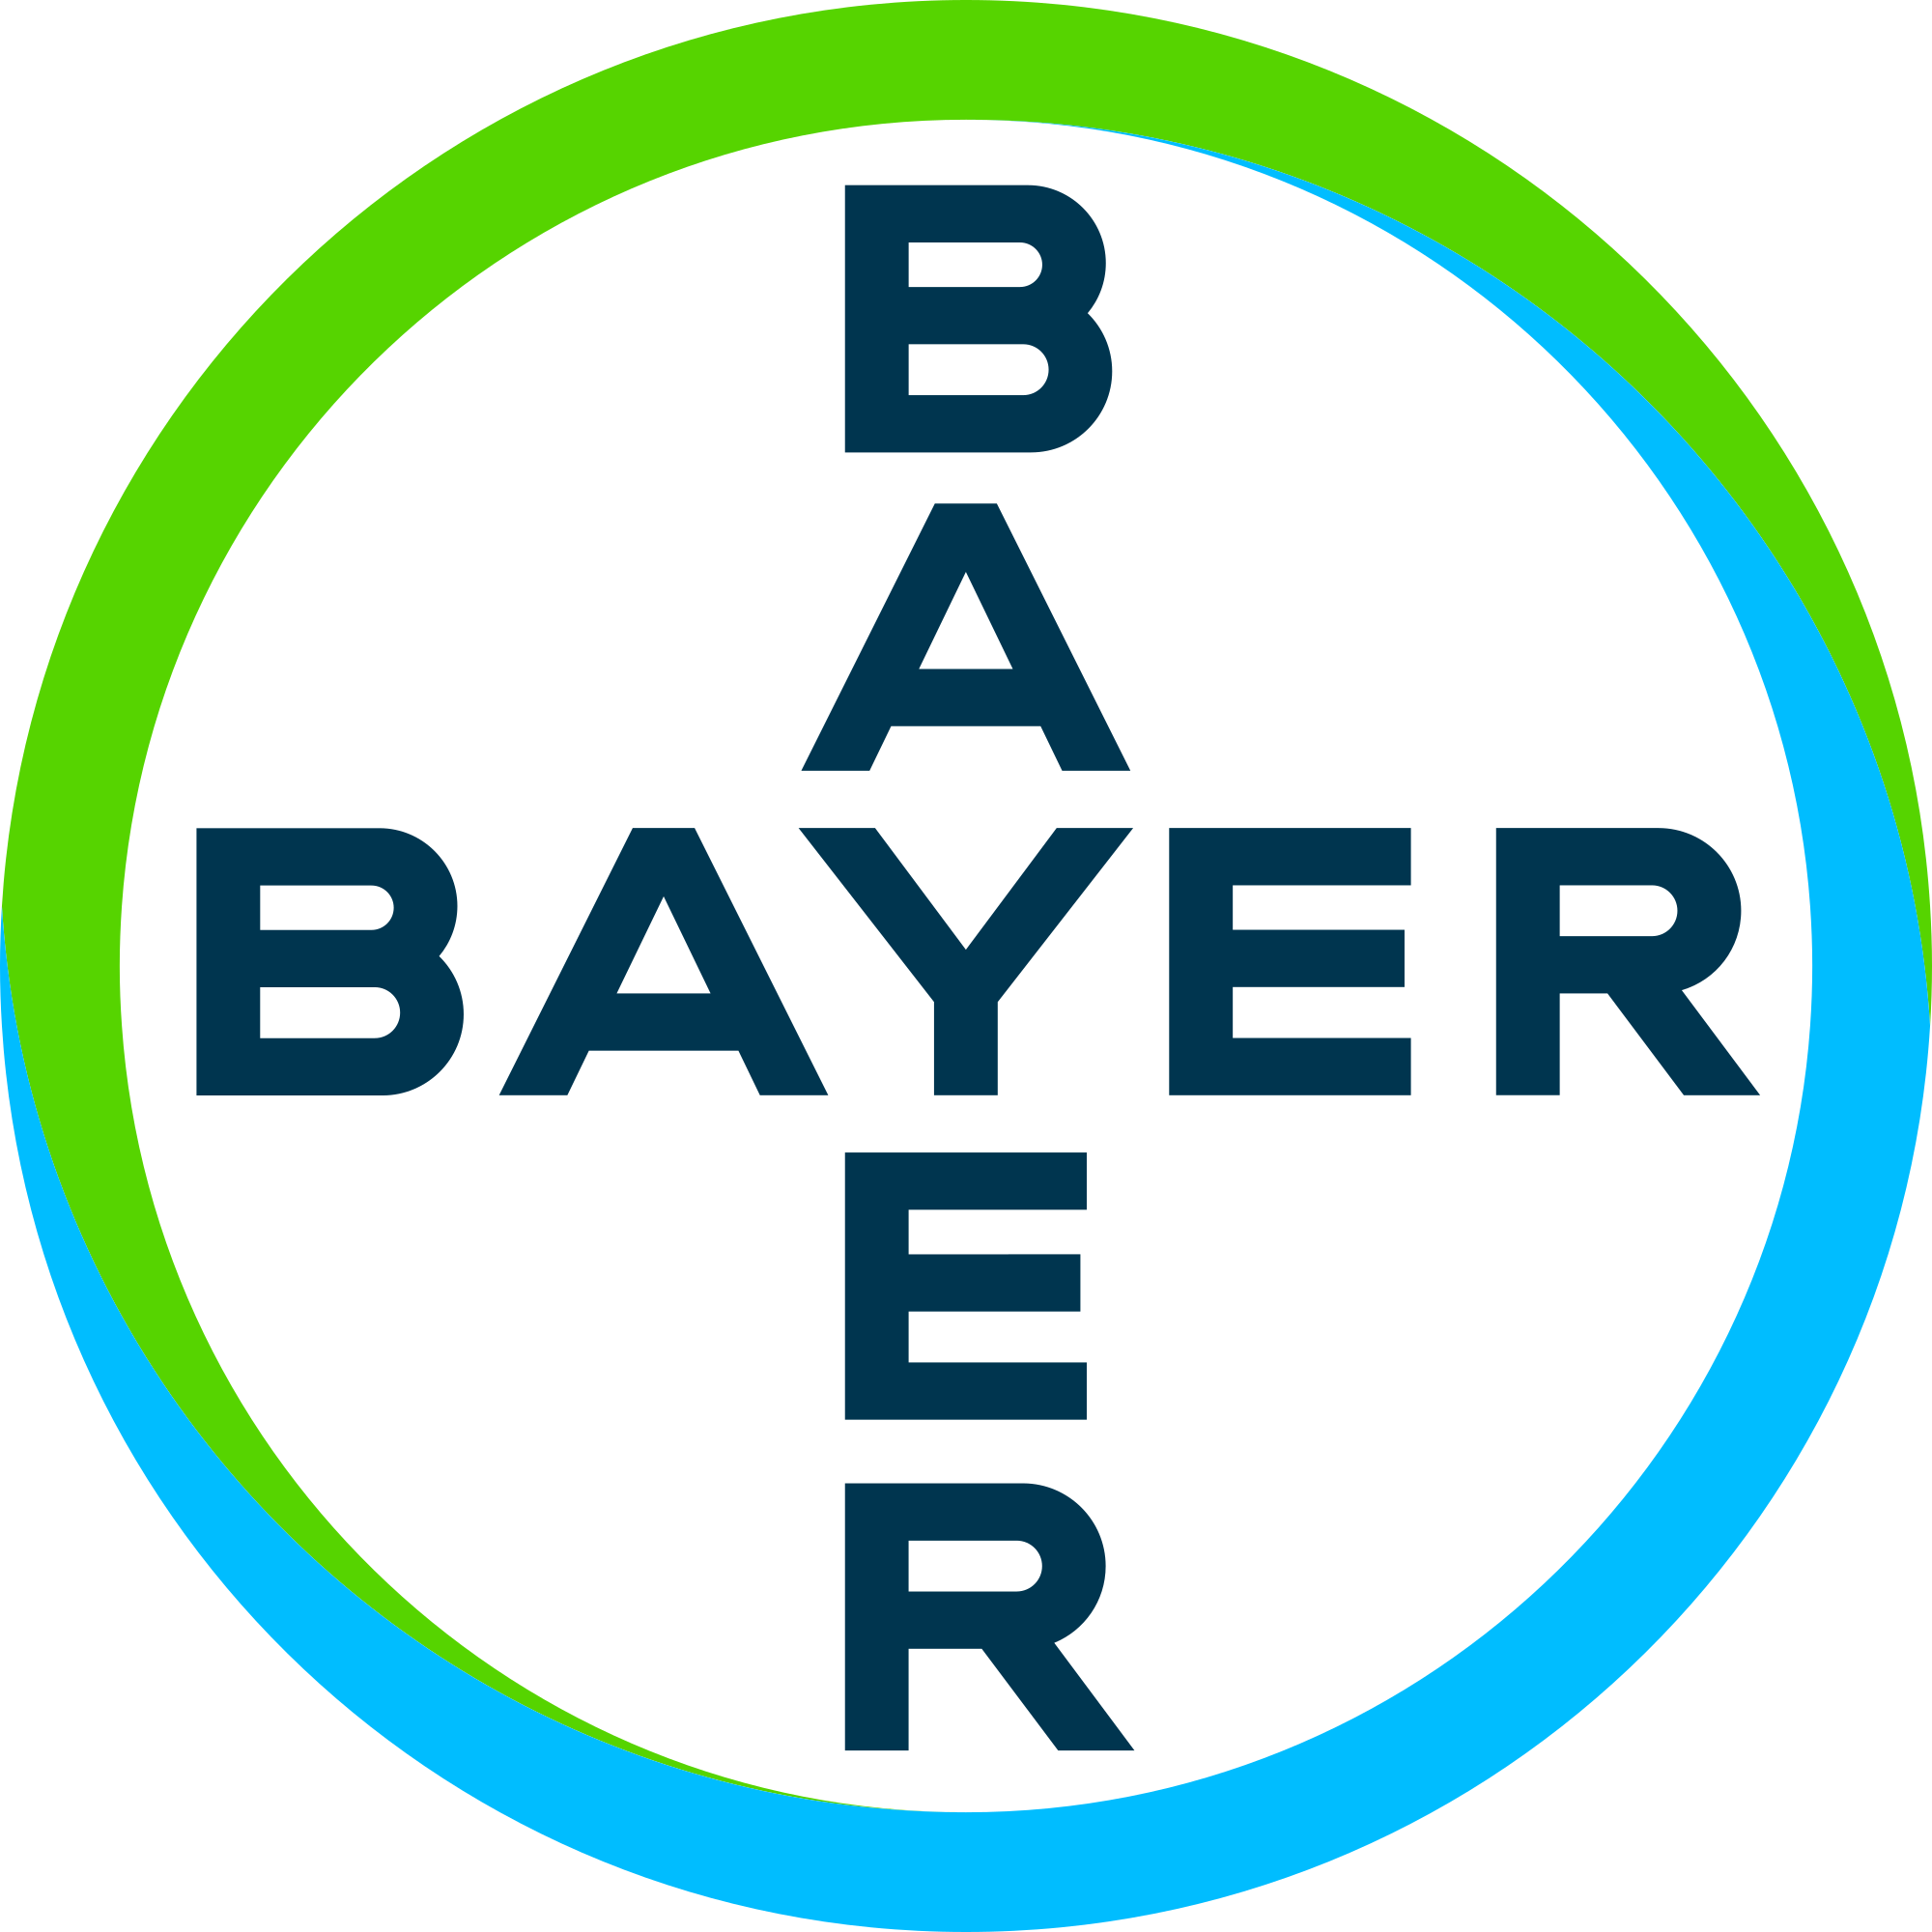 Bayer Việt Nam